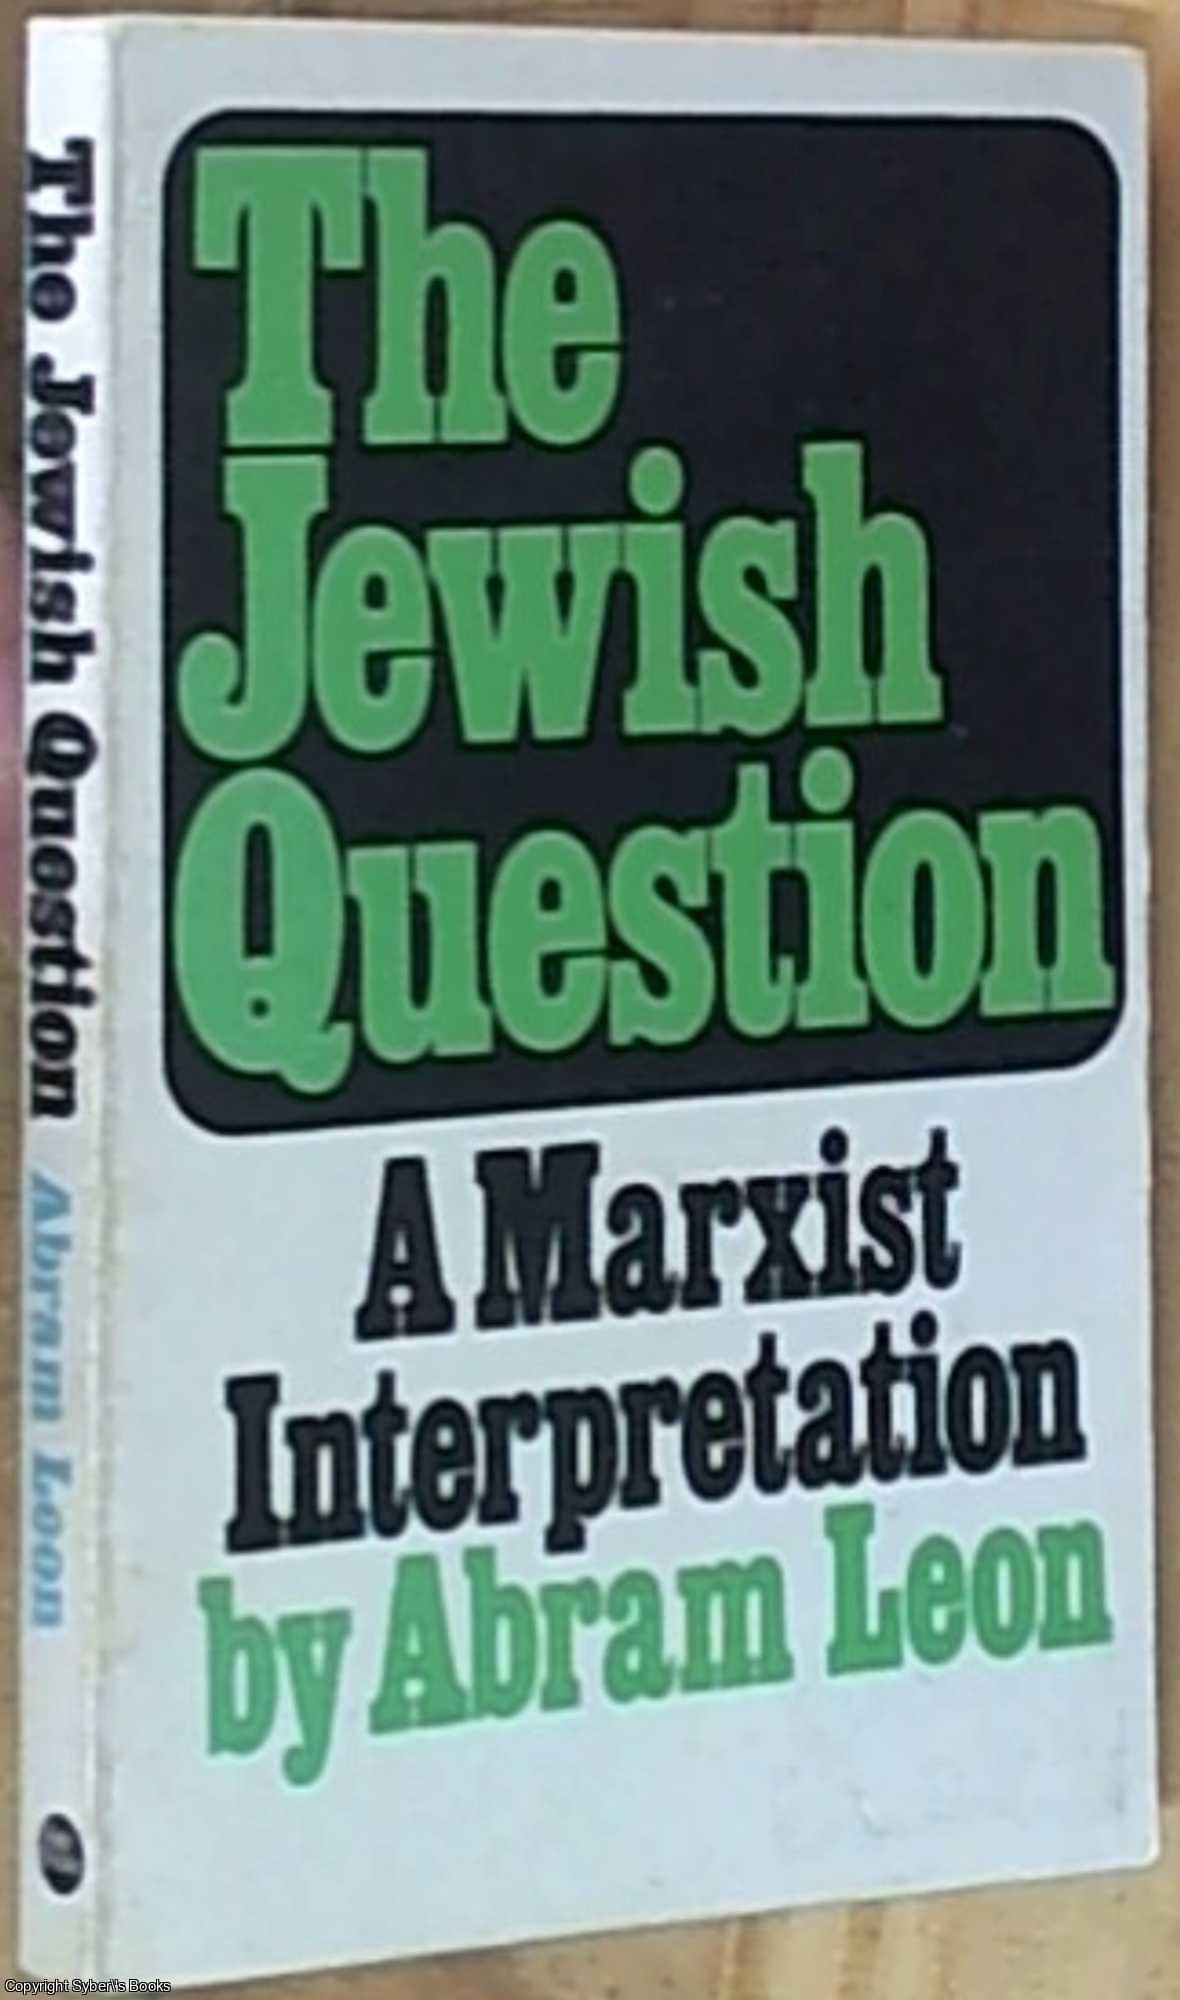 Leon, Abram - The Jewish Question: A Marxist Interpretation